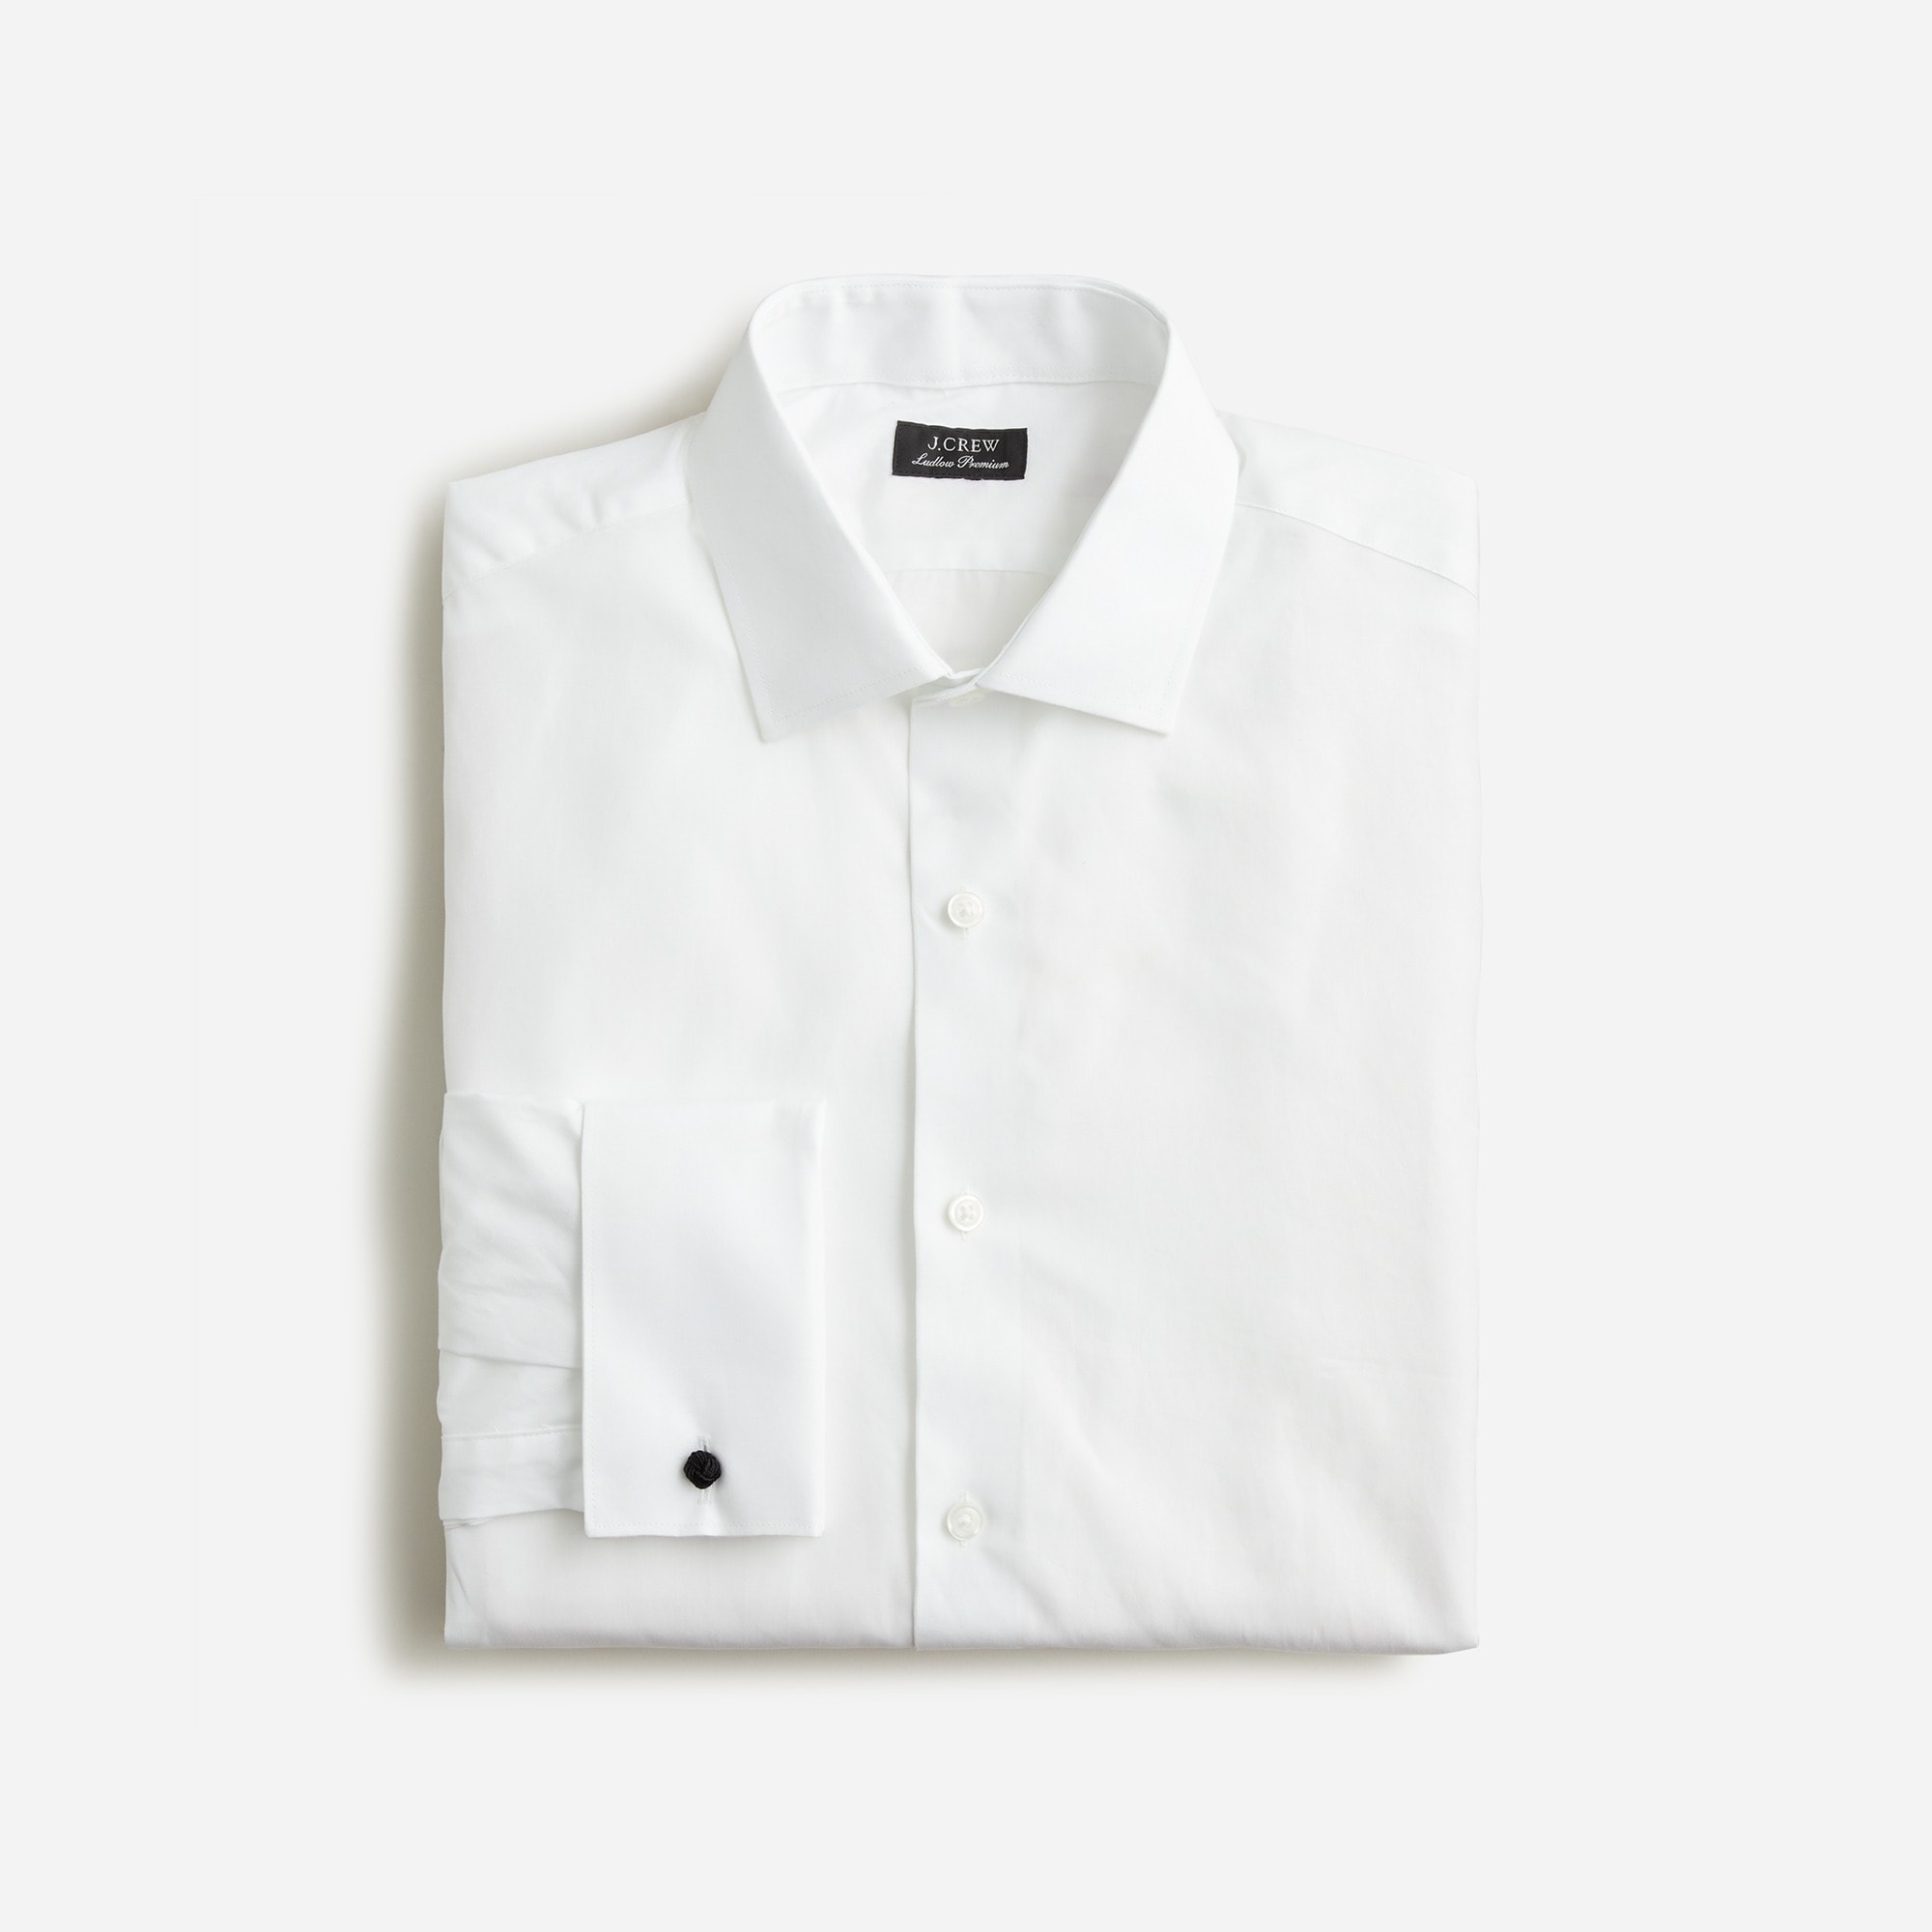 mens Ludlow Premium fine cotton dress shirt with french cuffs